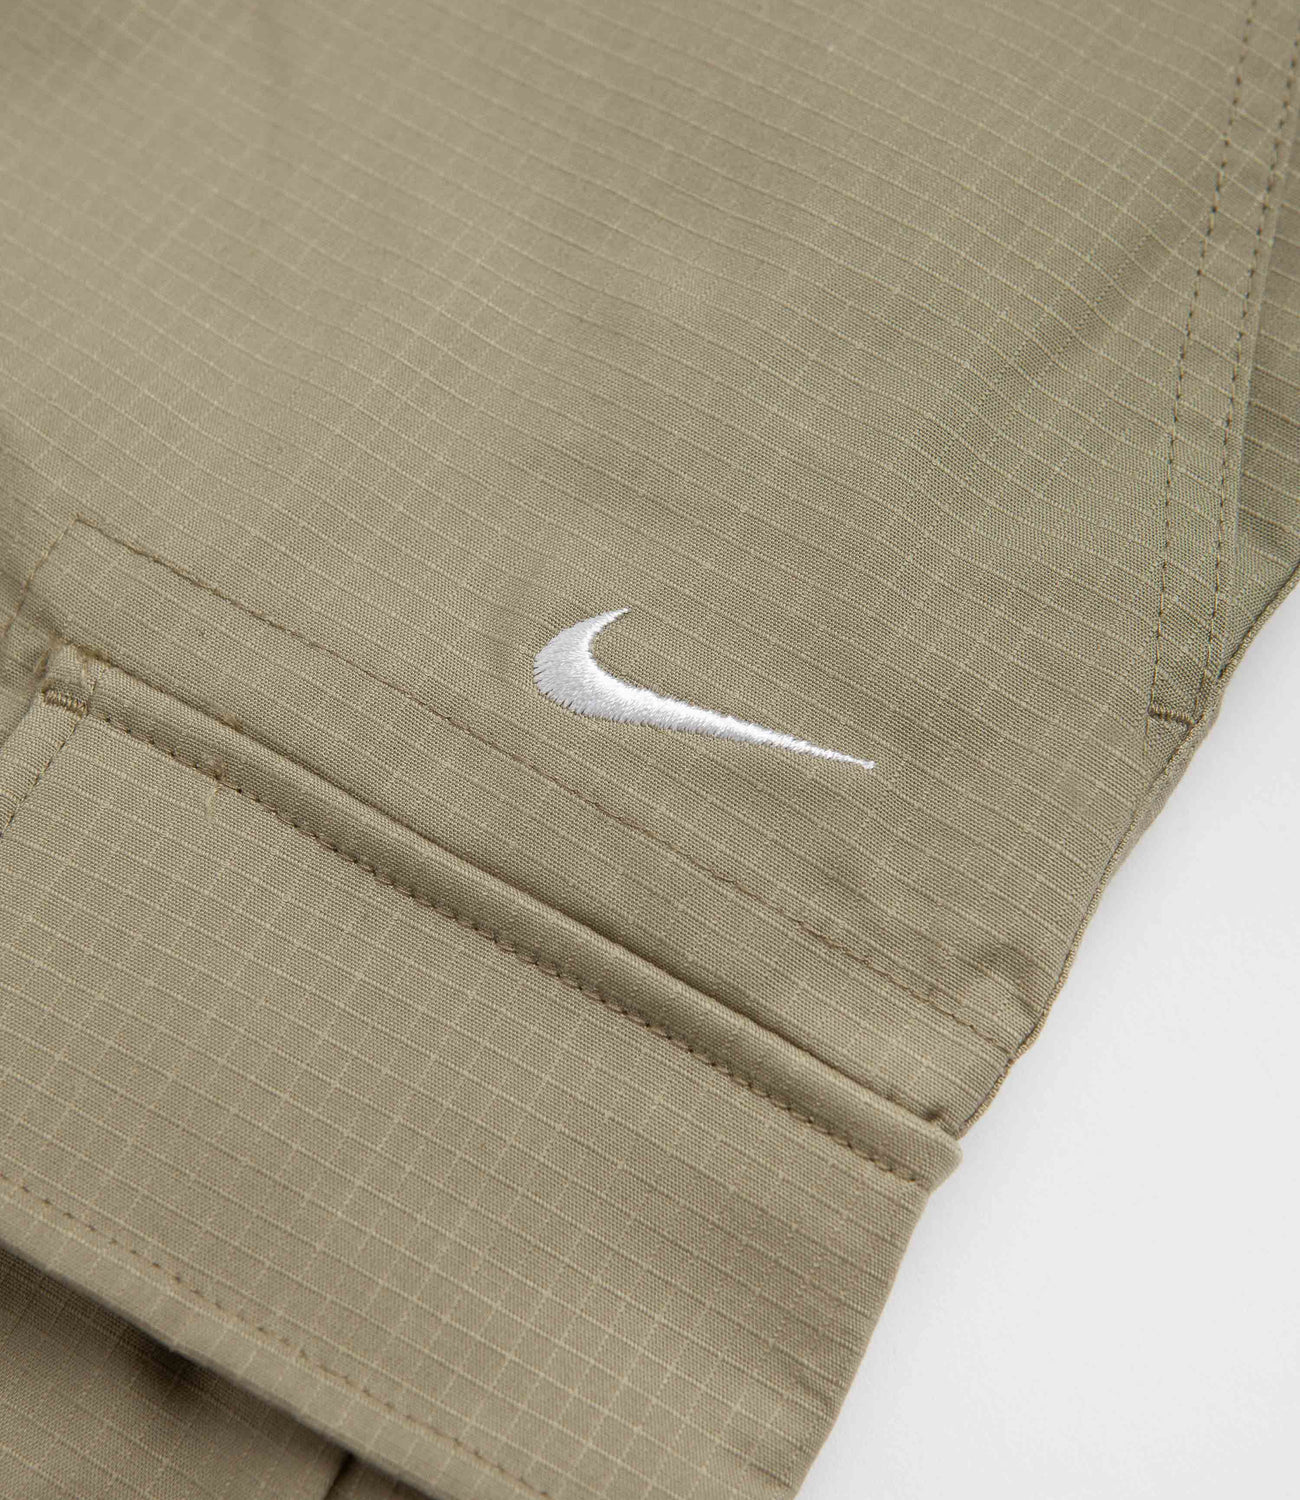 Nike SB Cargo Shorts - Neutral Olive / White | Flatspot